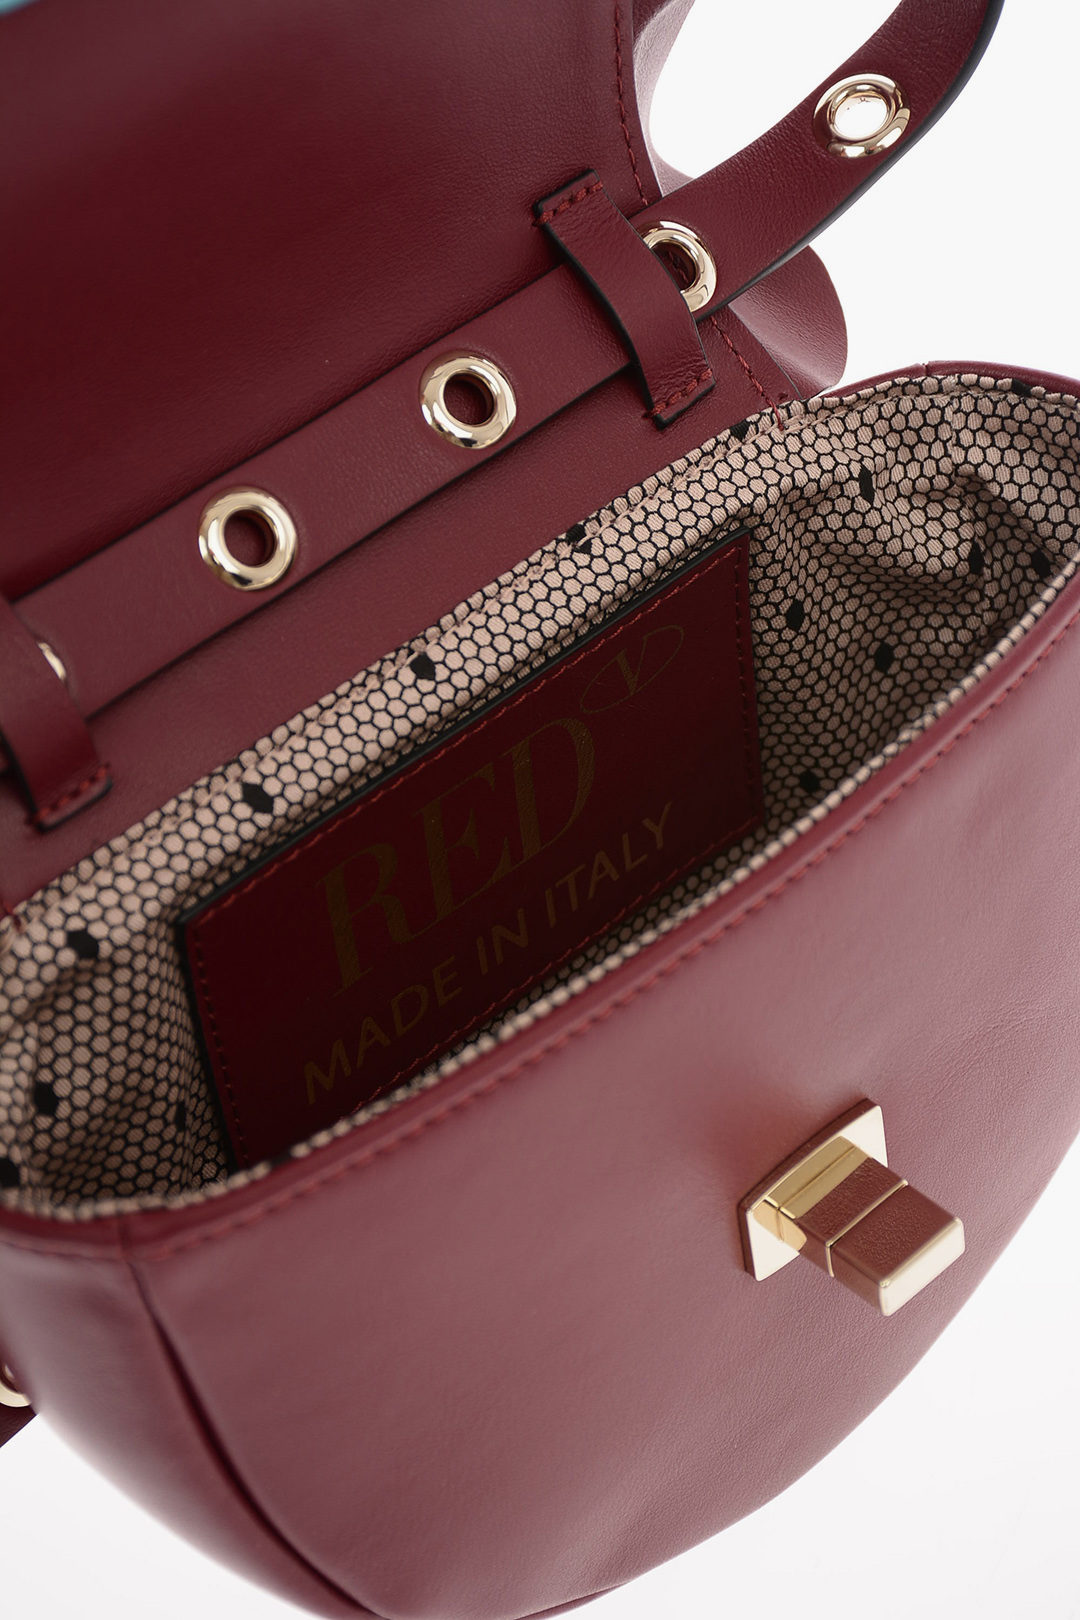 Red Valentino 'Rock Ruffles' shoulder bag, Women's Bags